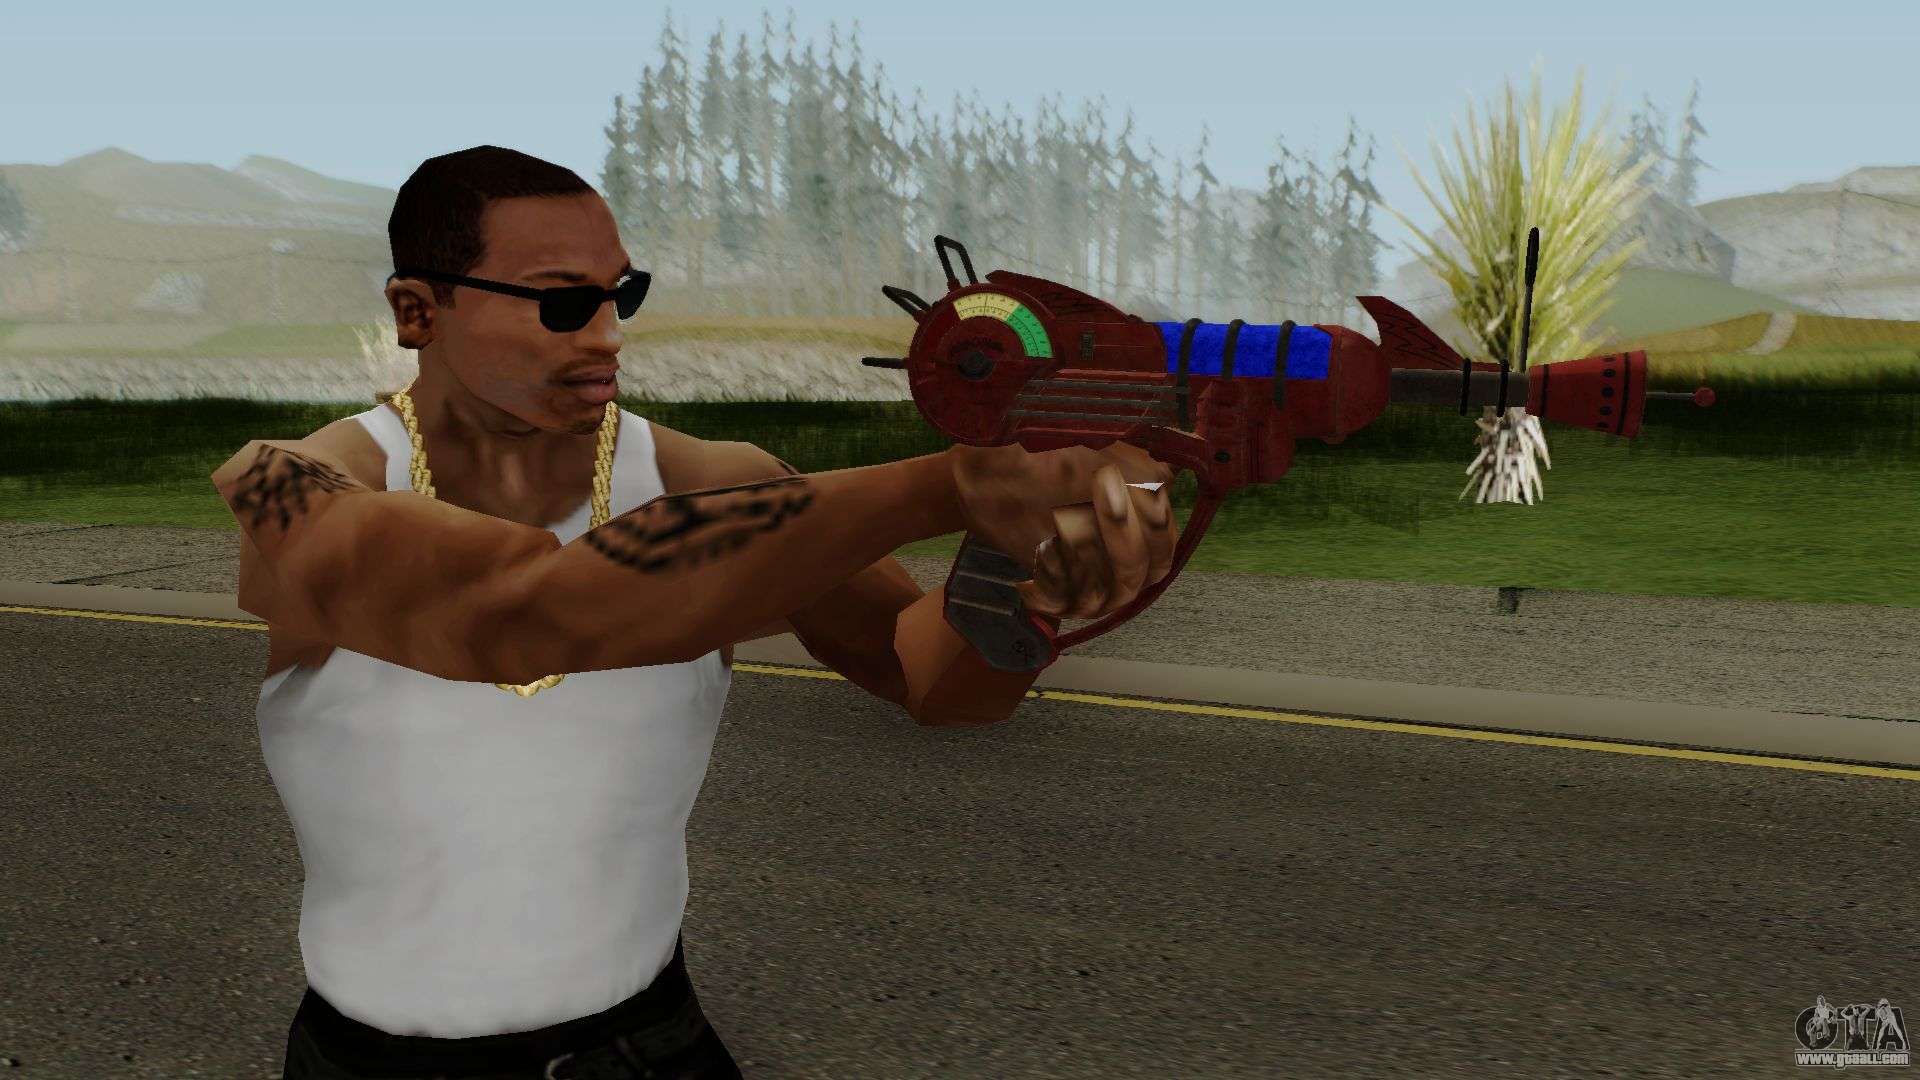 GTA 5 PC Mods - RAY GUN MARK II WEAPON MOD!!! GTA 5 Ray Gun Mod Gameplay! 